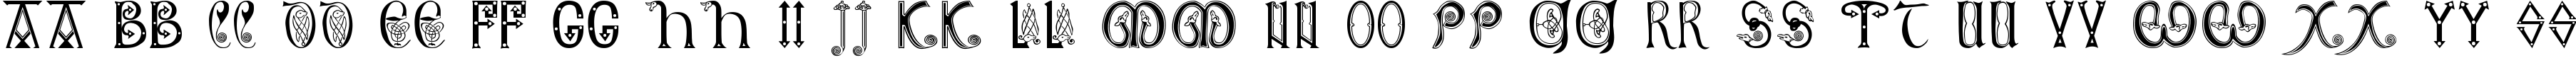 Пример написания английского алфавита шрифтом Anglo-Saxon, 8th c.